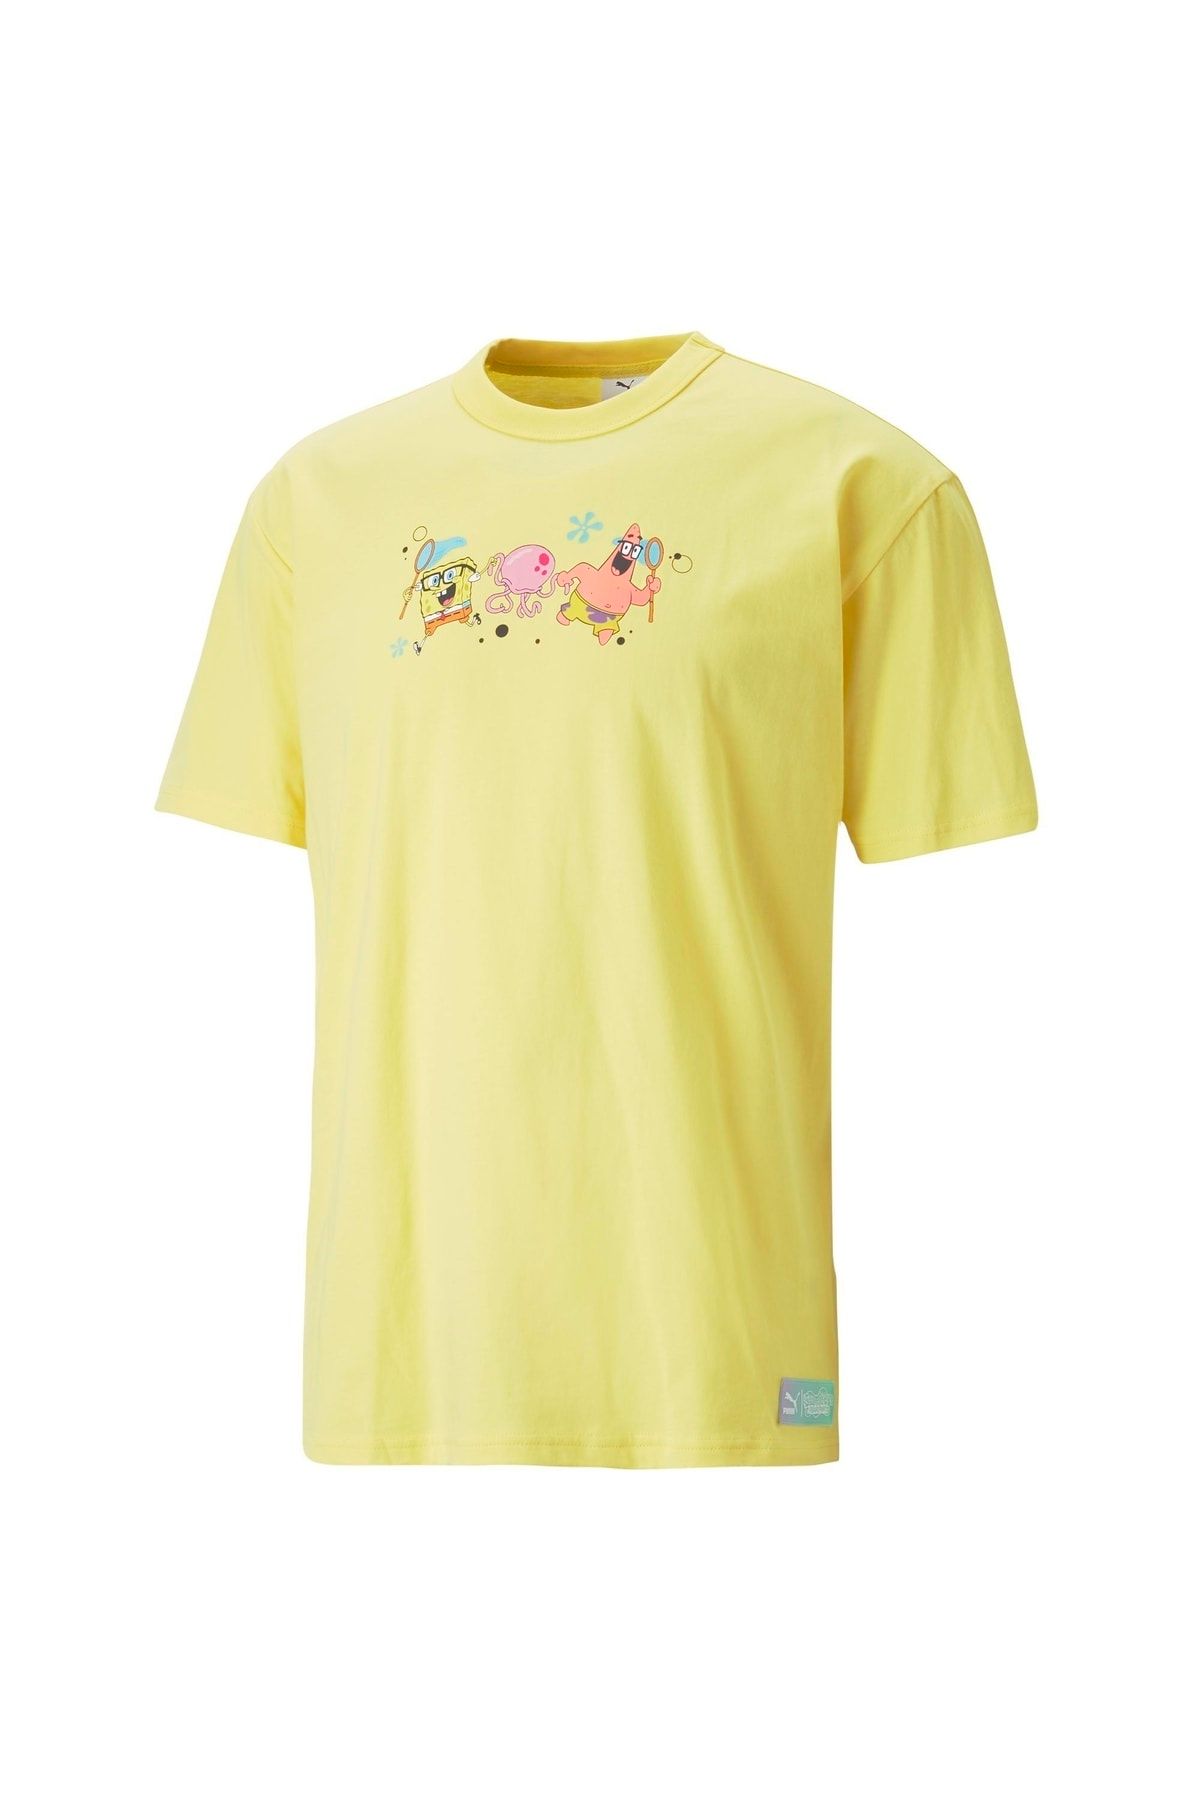 Puma X Spongebob Graphic Tee Lucent Yellow Erkek/unisex T-shirt